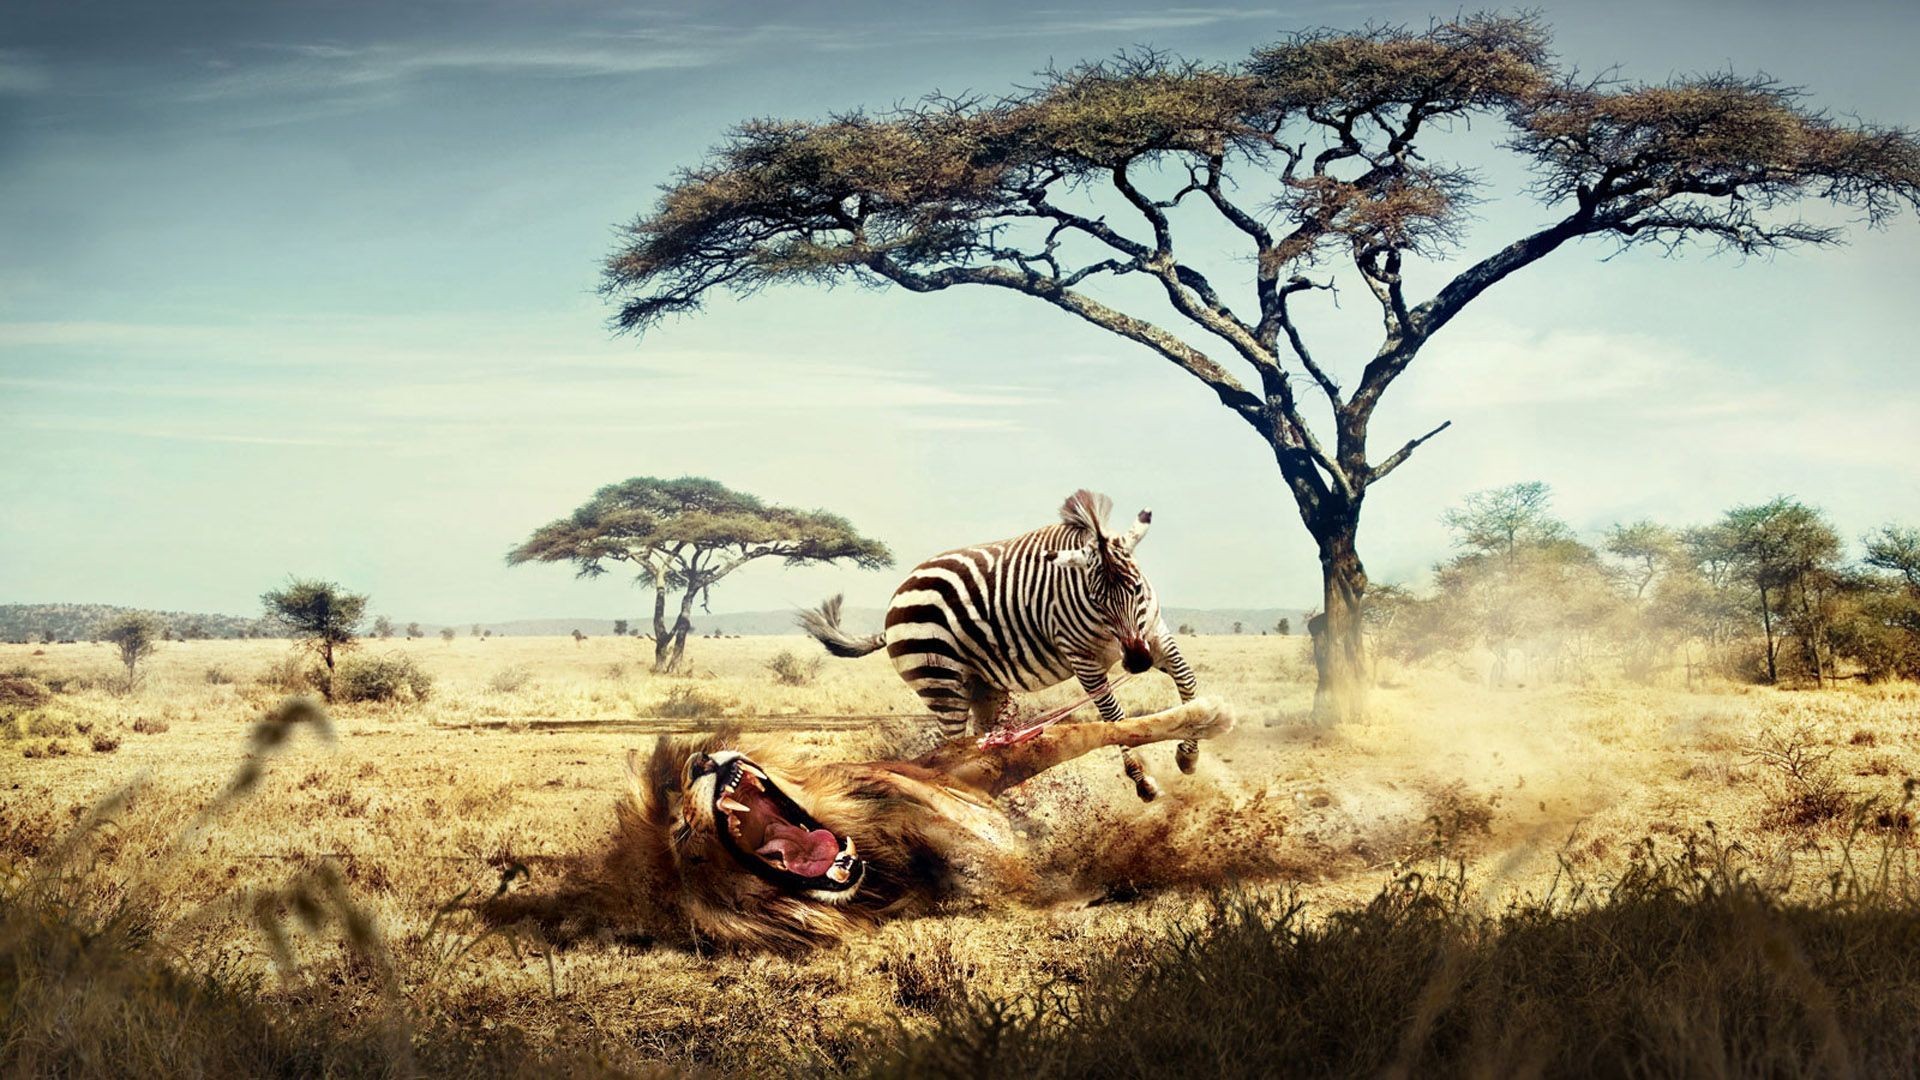 General 1920x1080 nature animals zebras trees hunter lion fantasy art Africa savannah humor artwork